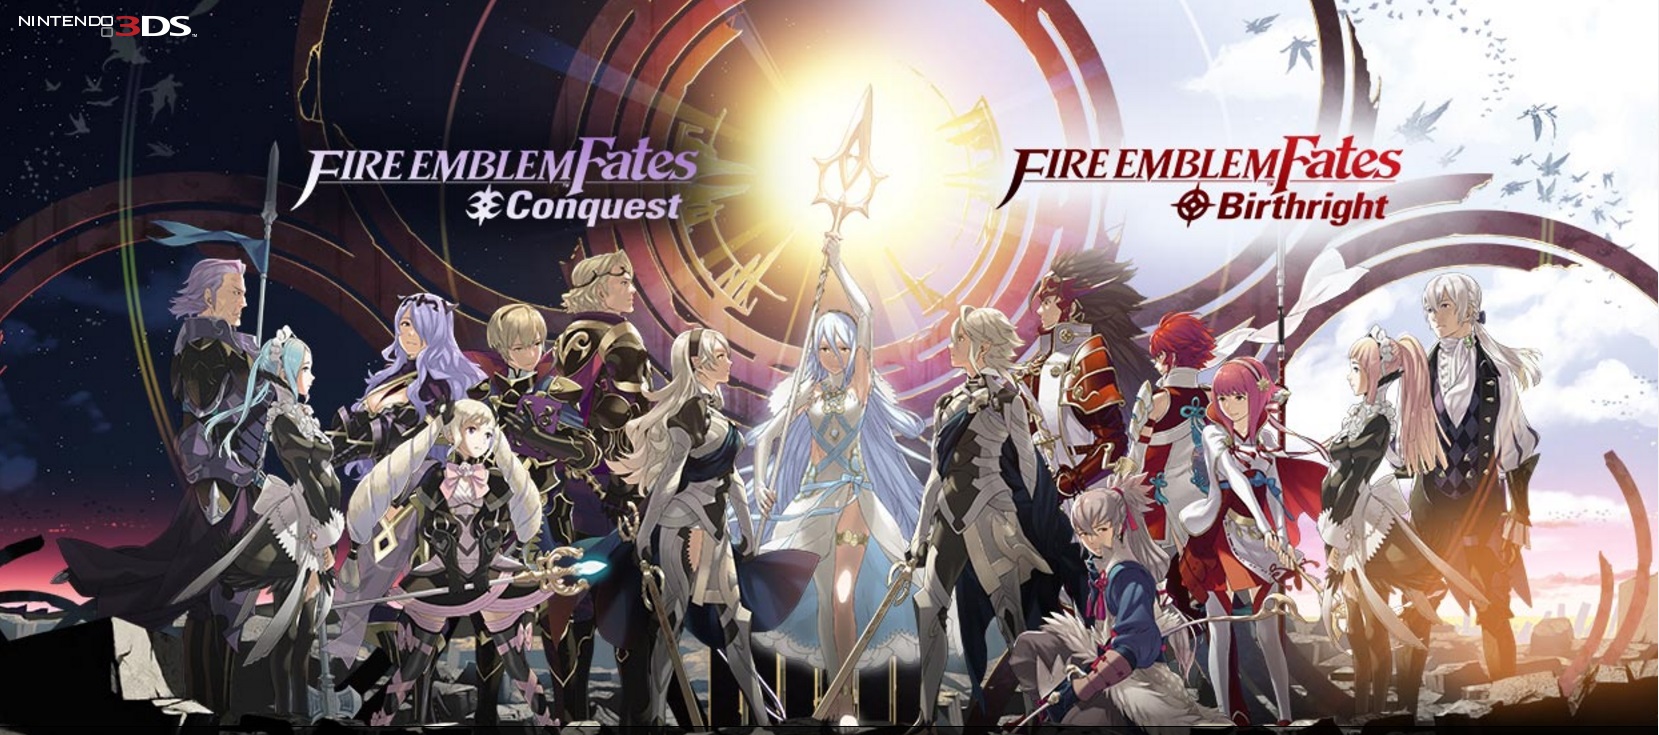 Fire Emblem Fates Wallpaper Birthright Conquest 3ds